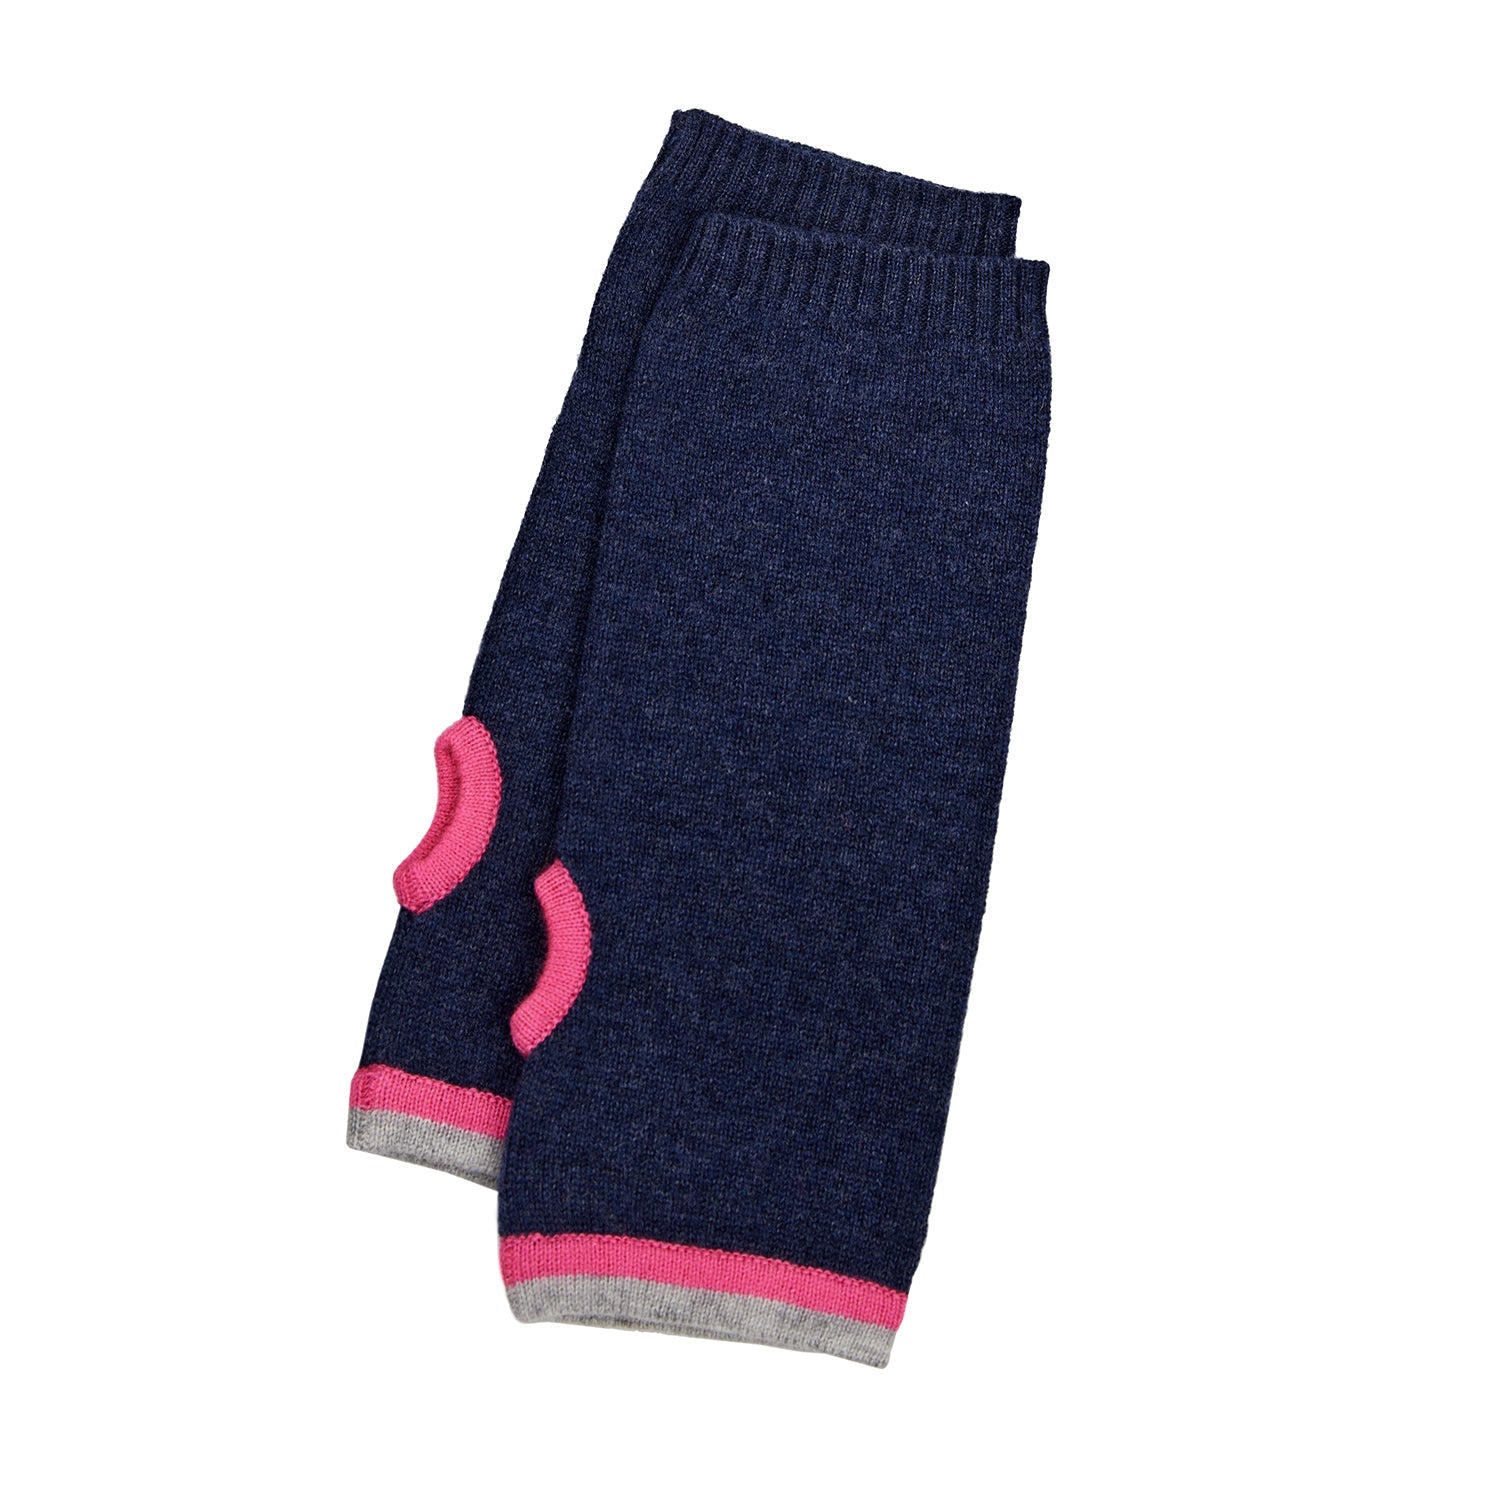 Renee Wrist Warmers Indigo With Grey & Neon Pink - Rock the Jumpsuit